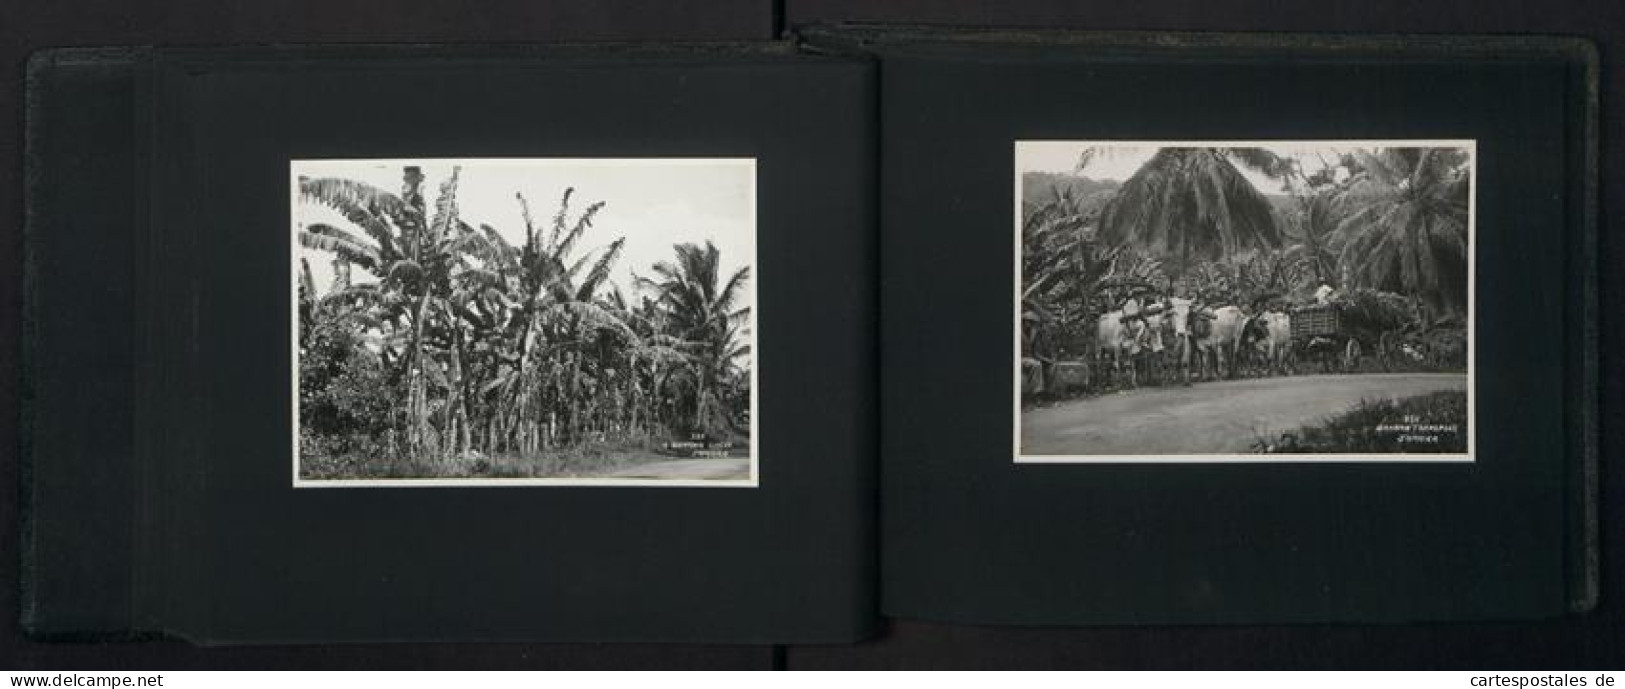 2 Fotoalben mit 99 Fotografien, Ansicht Panama, Karibikreise, Madeira, Antigua, Jamaica, Grenada, Barbados, Trinidad 